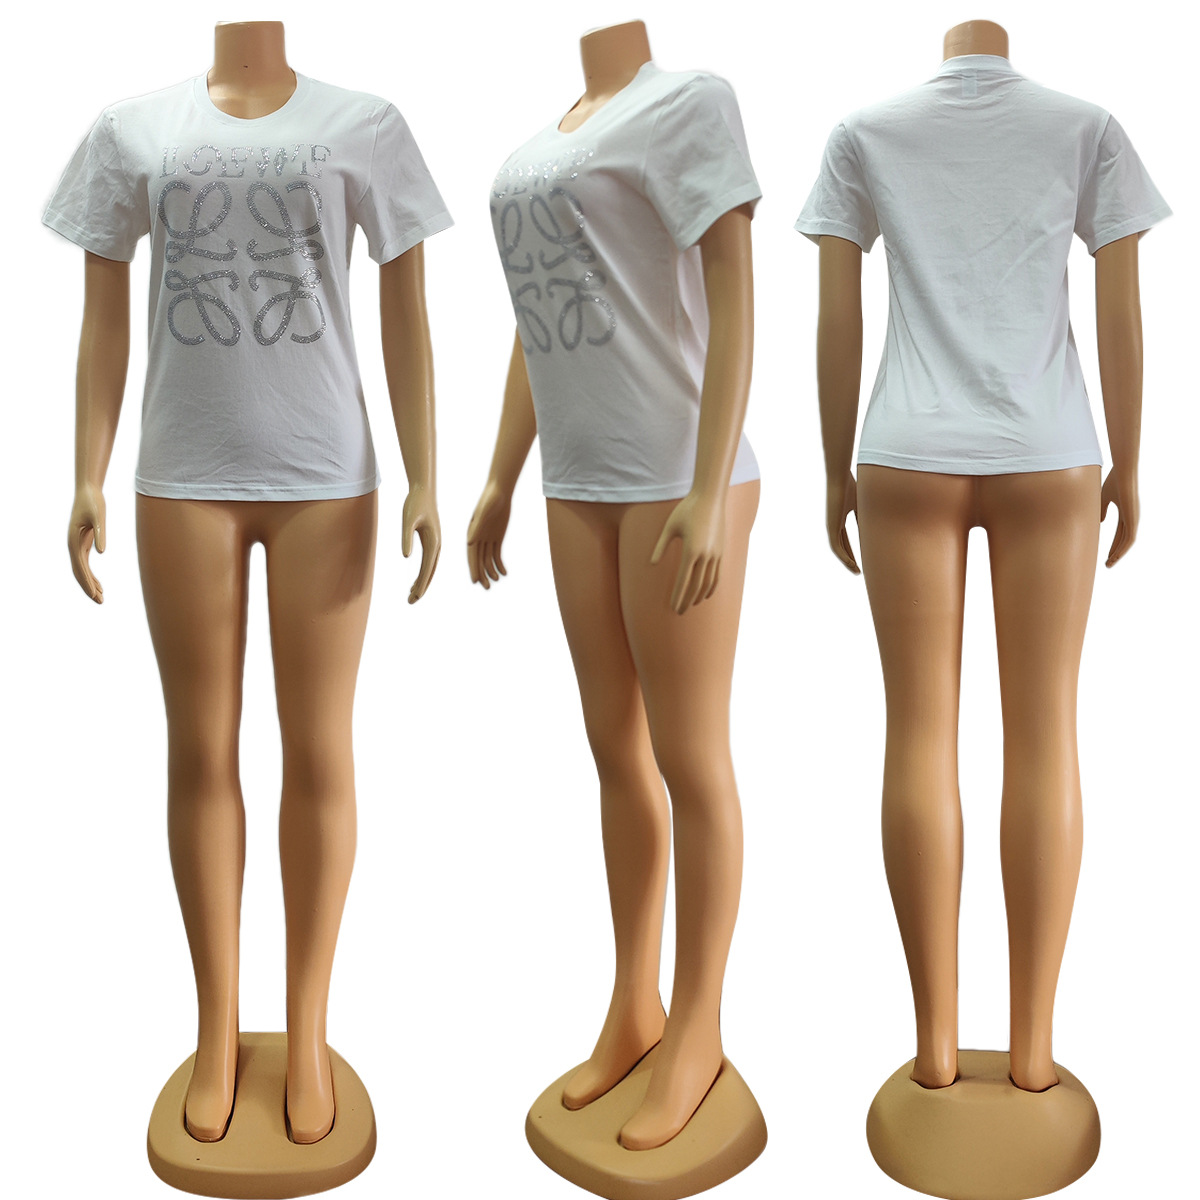 Designer Sequins T-shirt Blouses Women Casual Crew Neck Short Sleeve T-shirts Top Free Ship